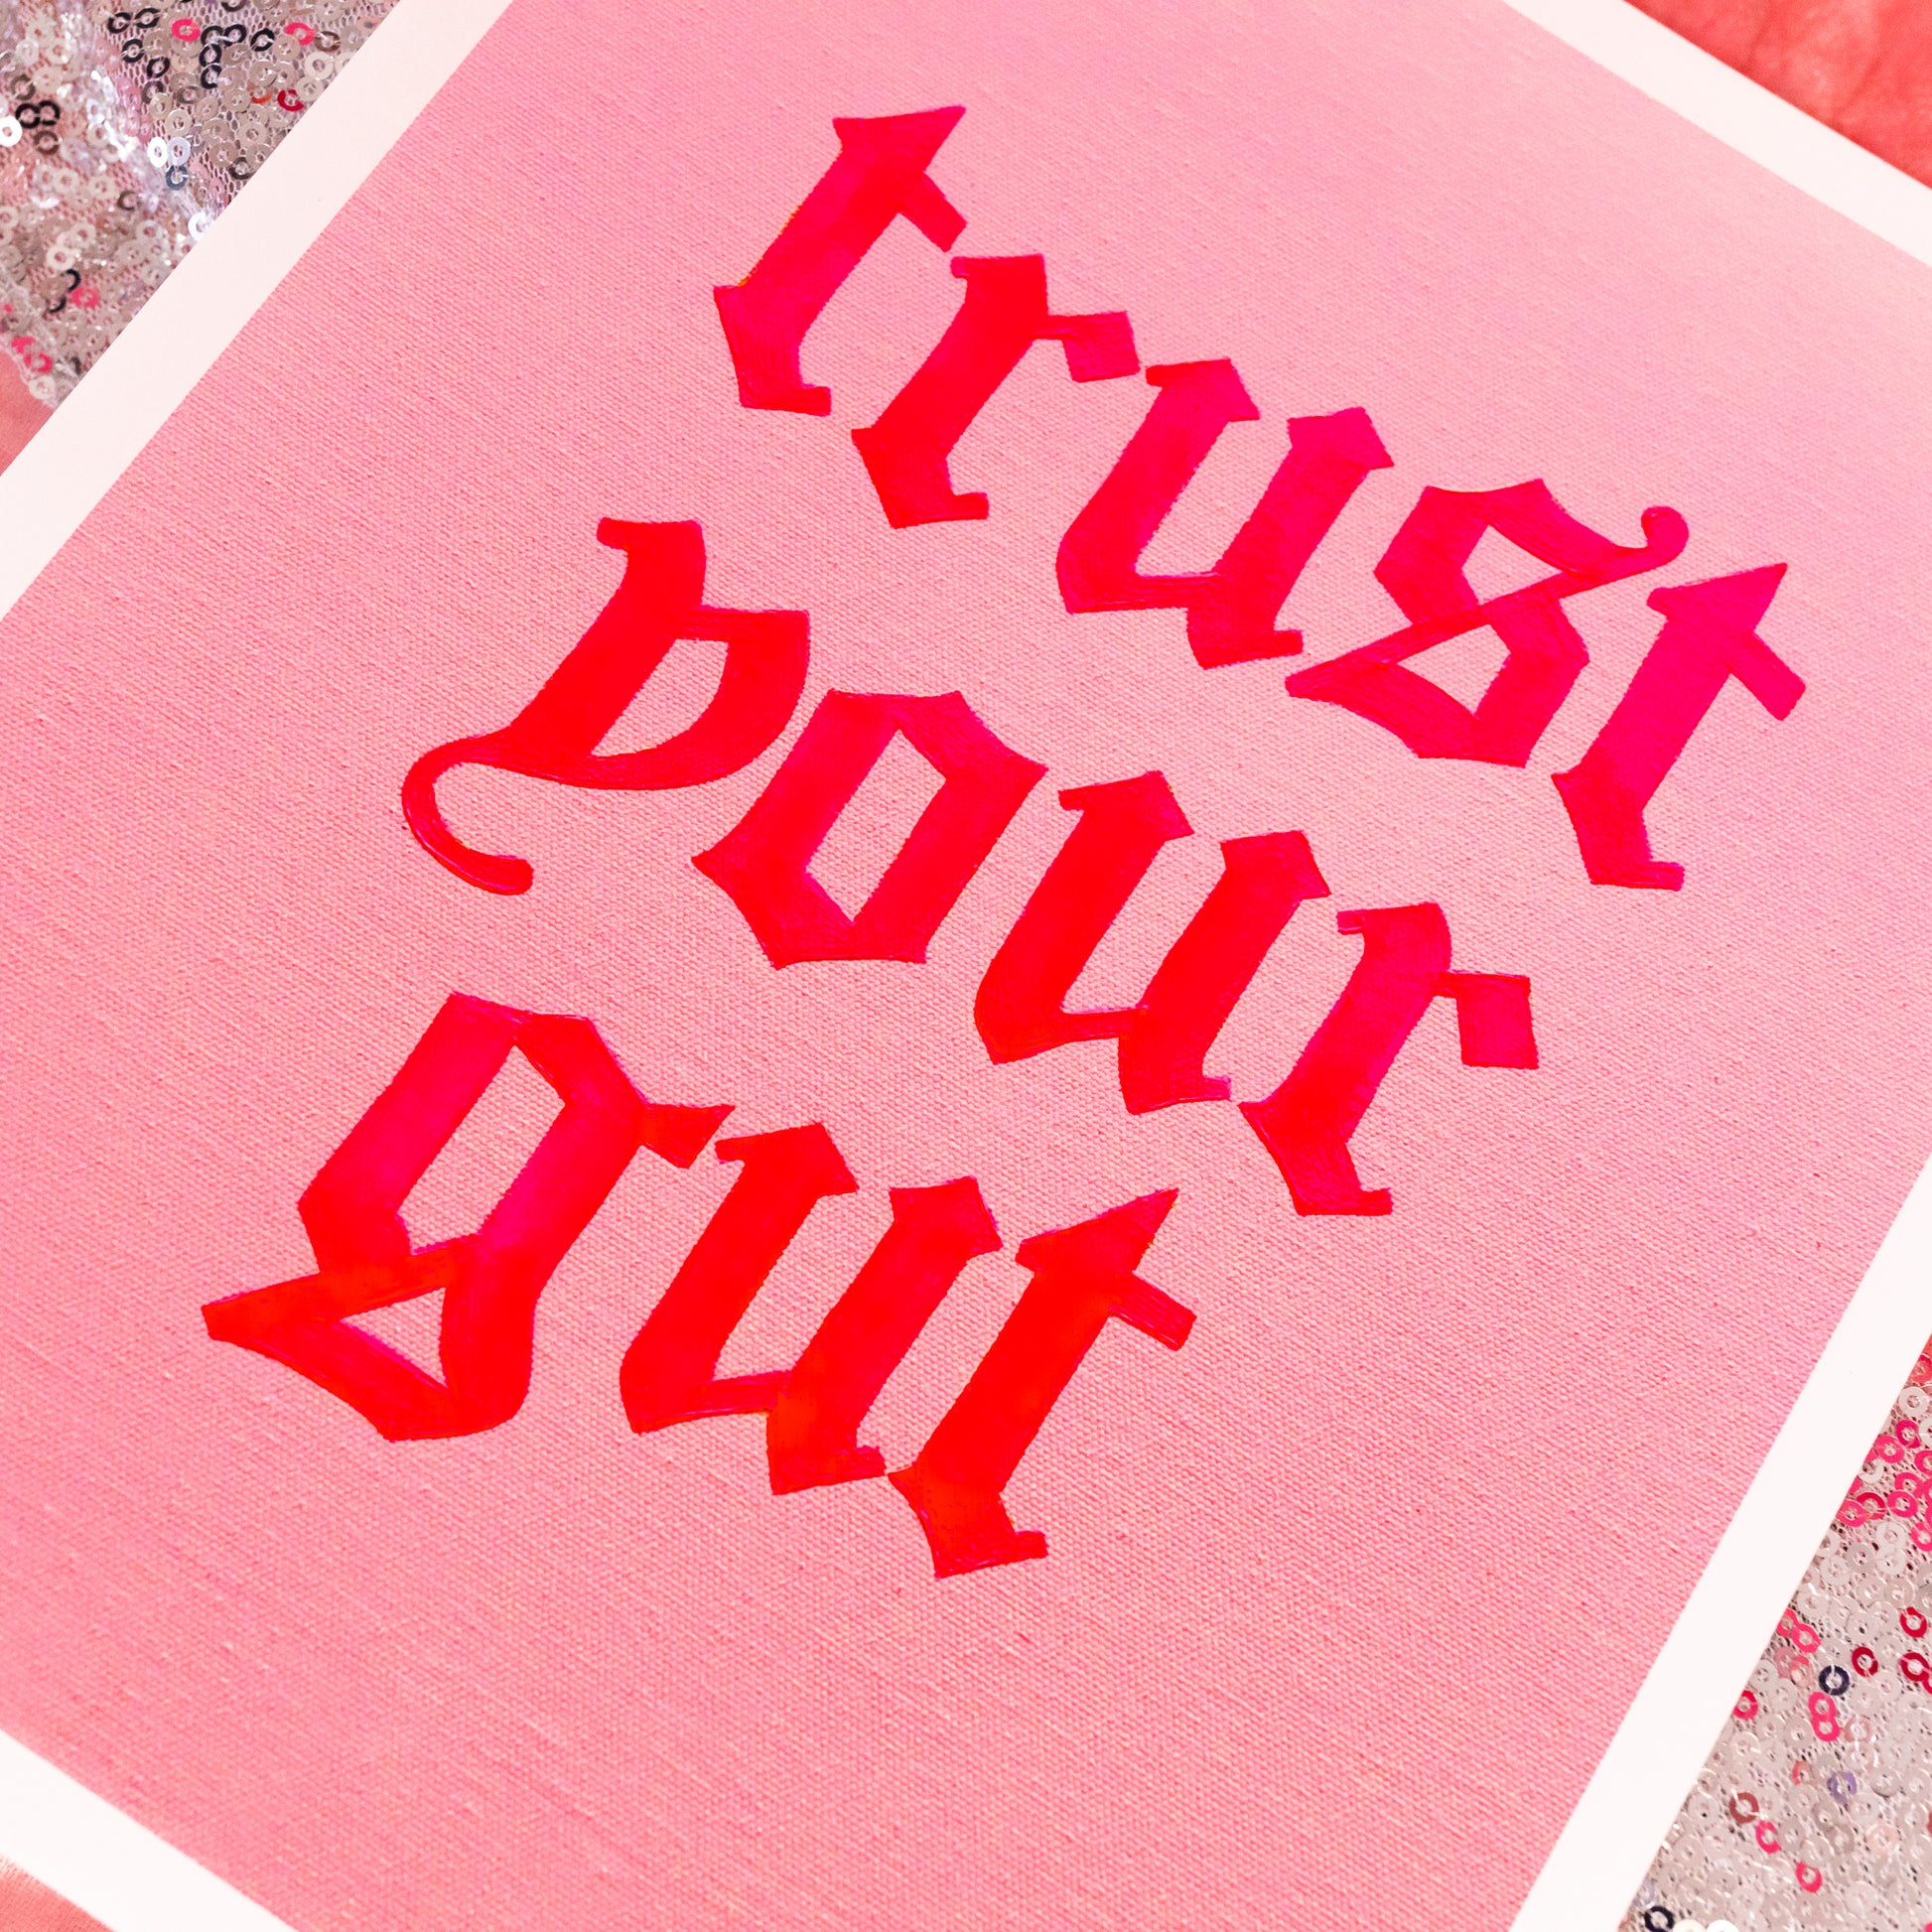 Trust Your Gut Art Print - Gasp